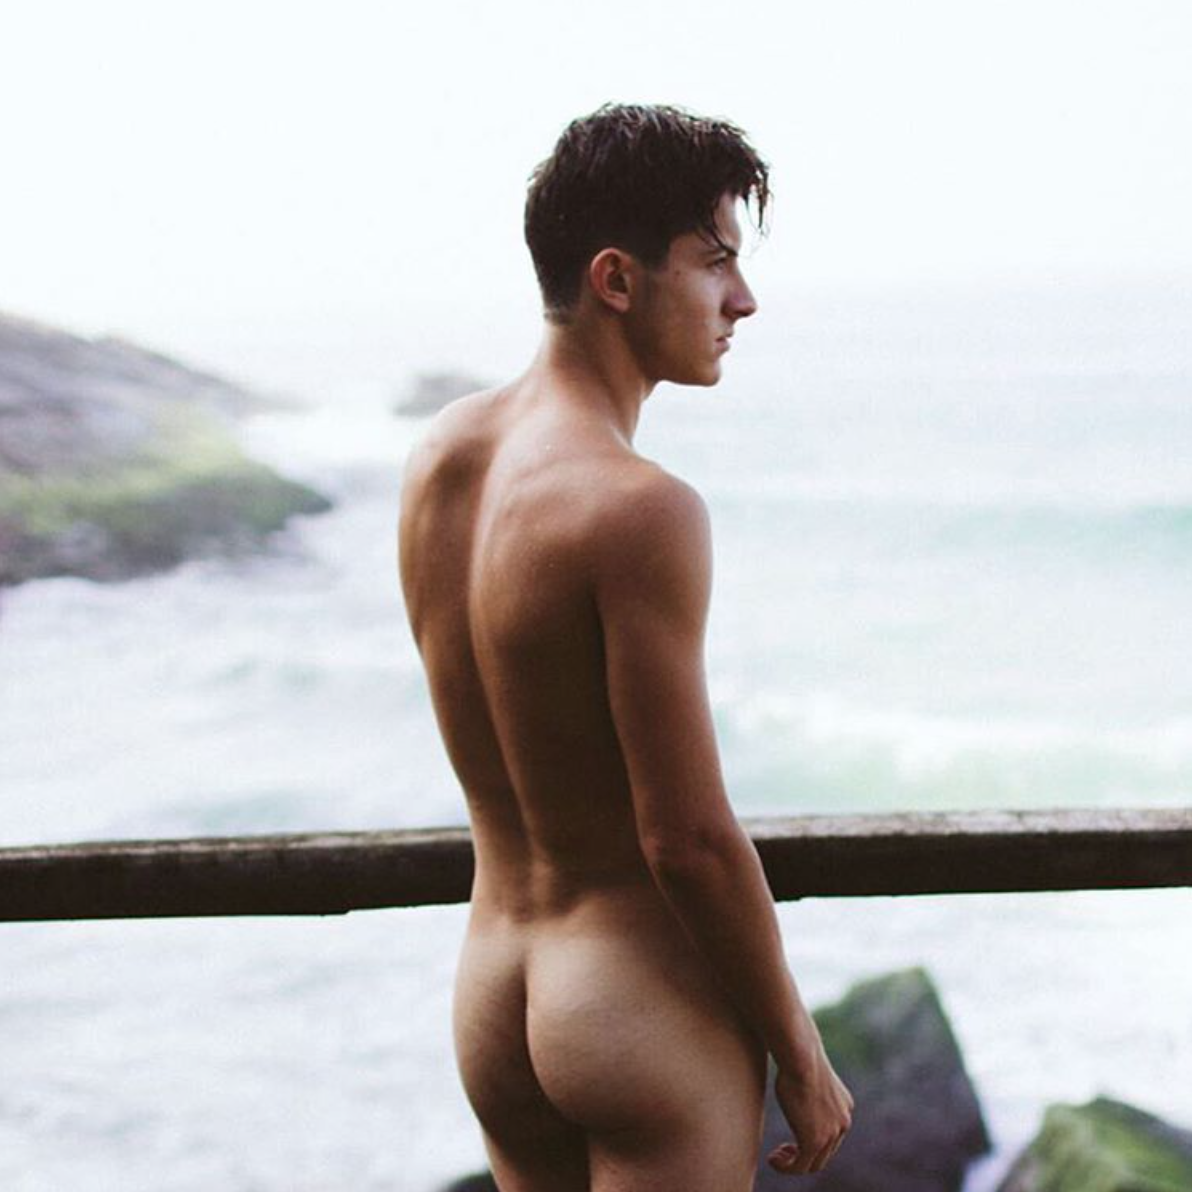 Jonan (Pekín Express) se desnuda en Instagram